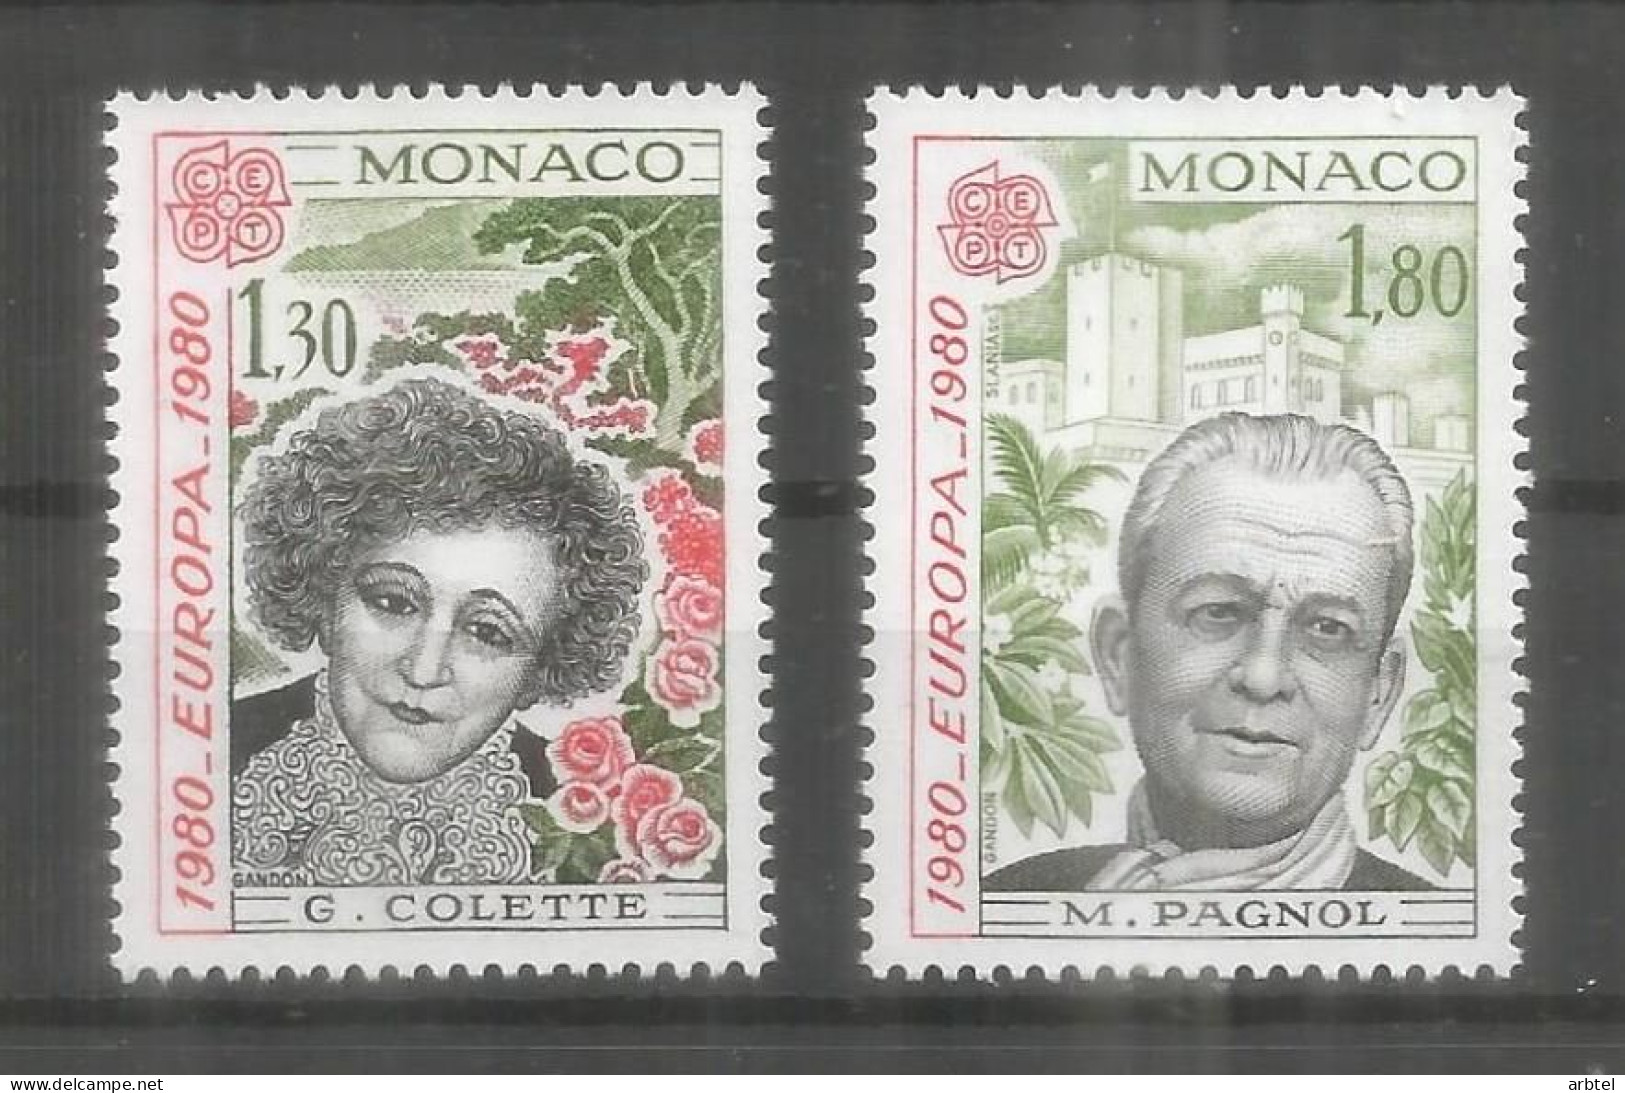 MONACO SLANIA EUROPA 1980 PAGNOL COLETTE CINE LITERATURA - 1980